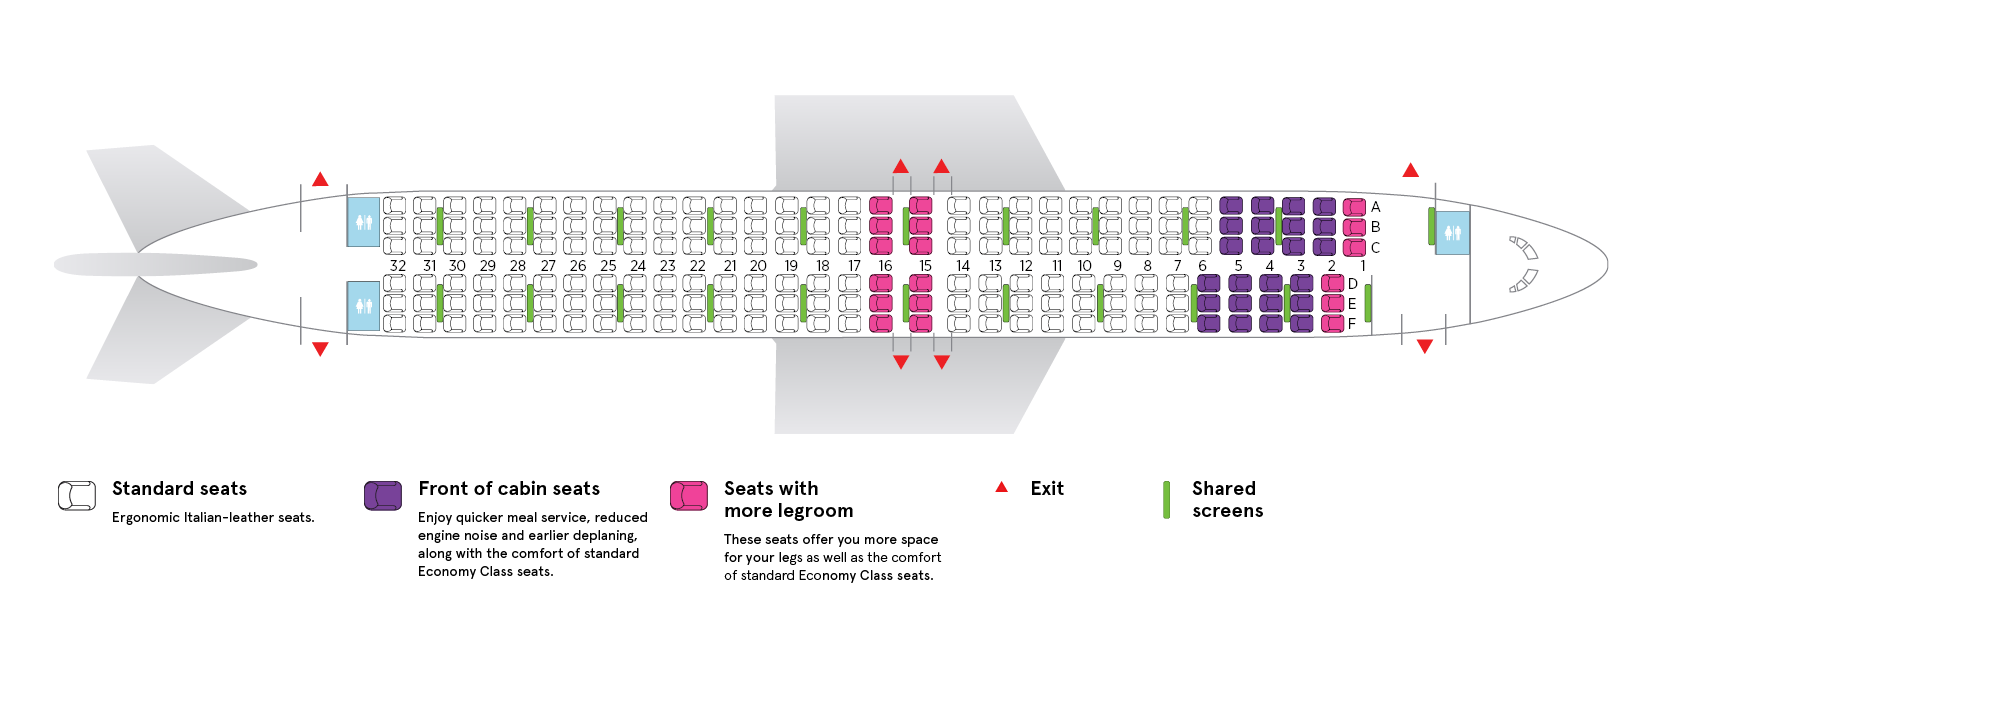 Air Transat Boeing 737-800 aircraft cabin